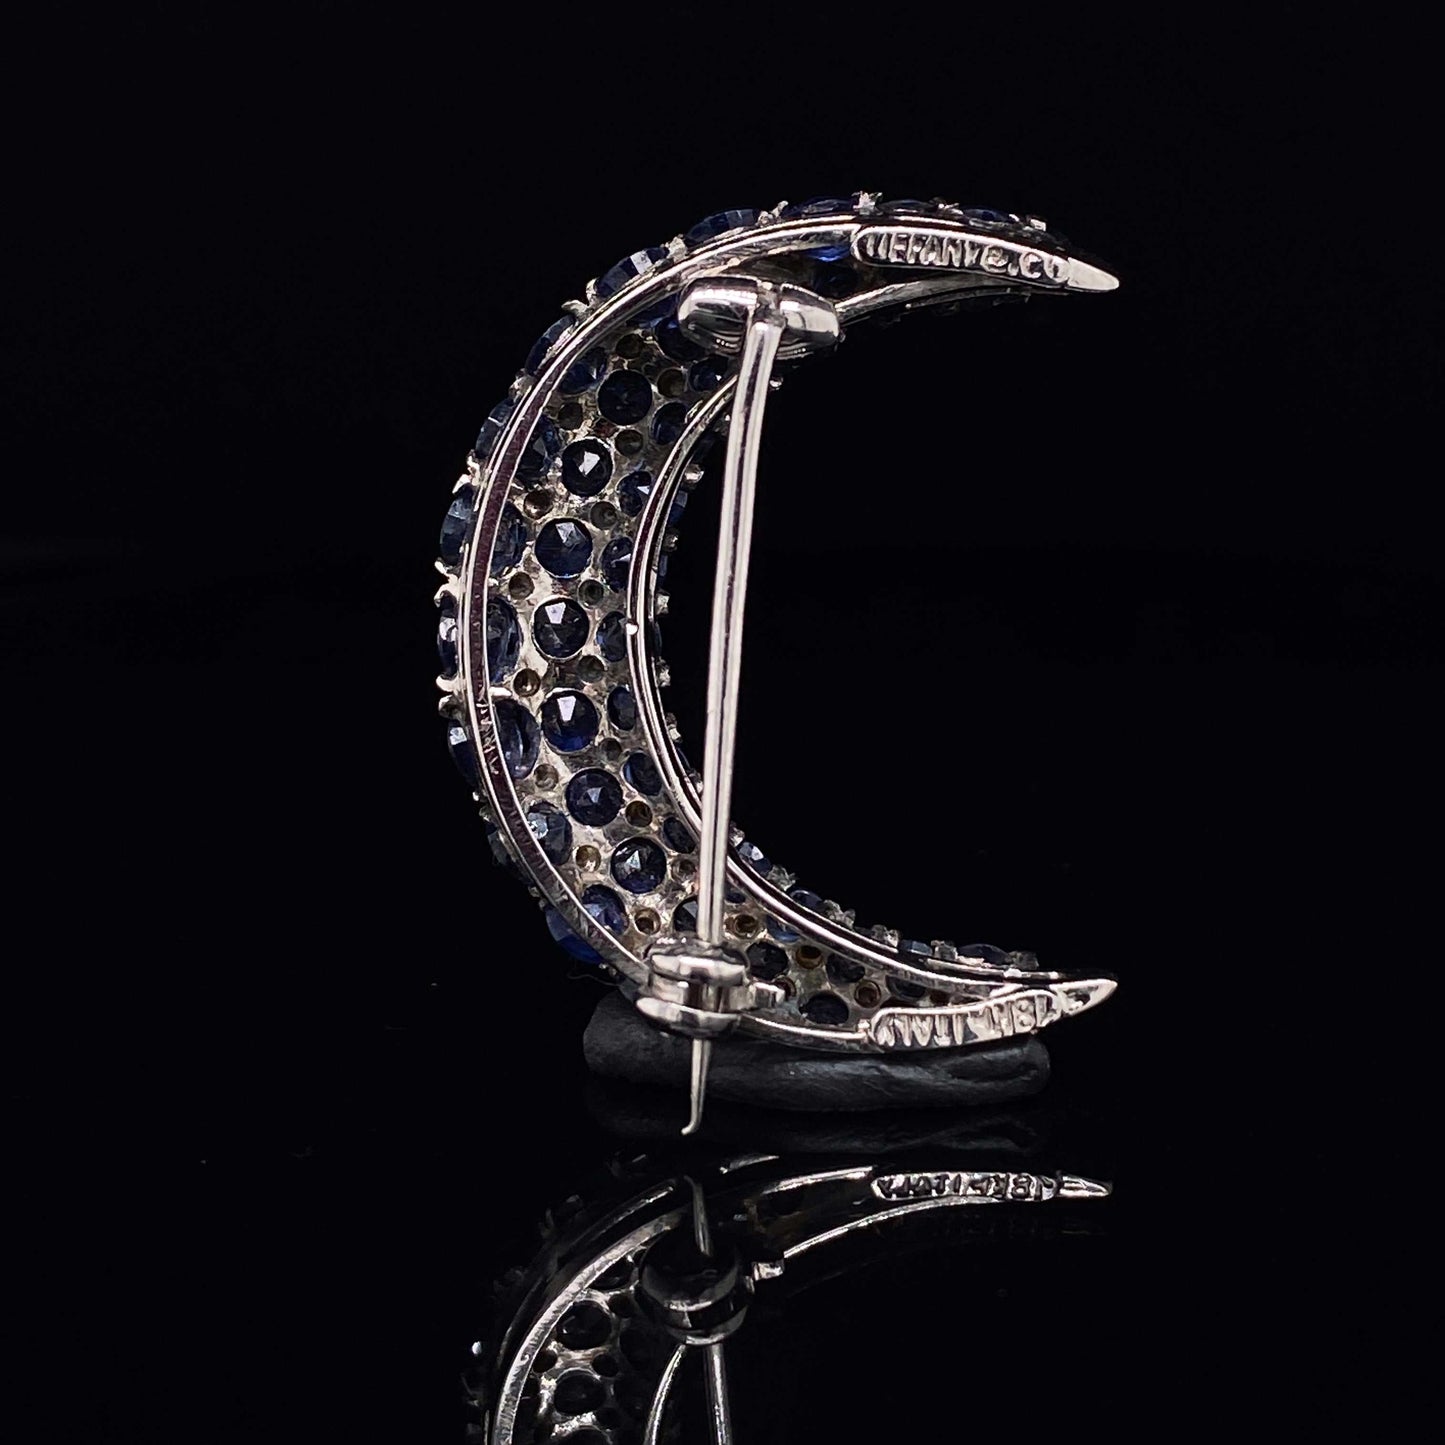 Tiffany & Co. Sapphire and Diamond Brooch